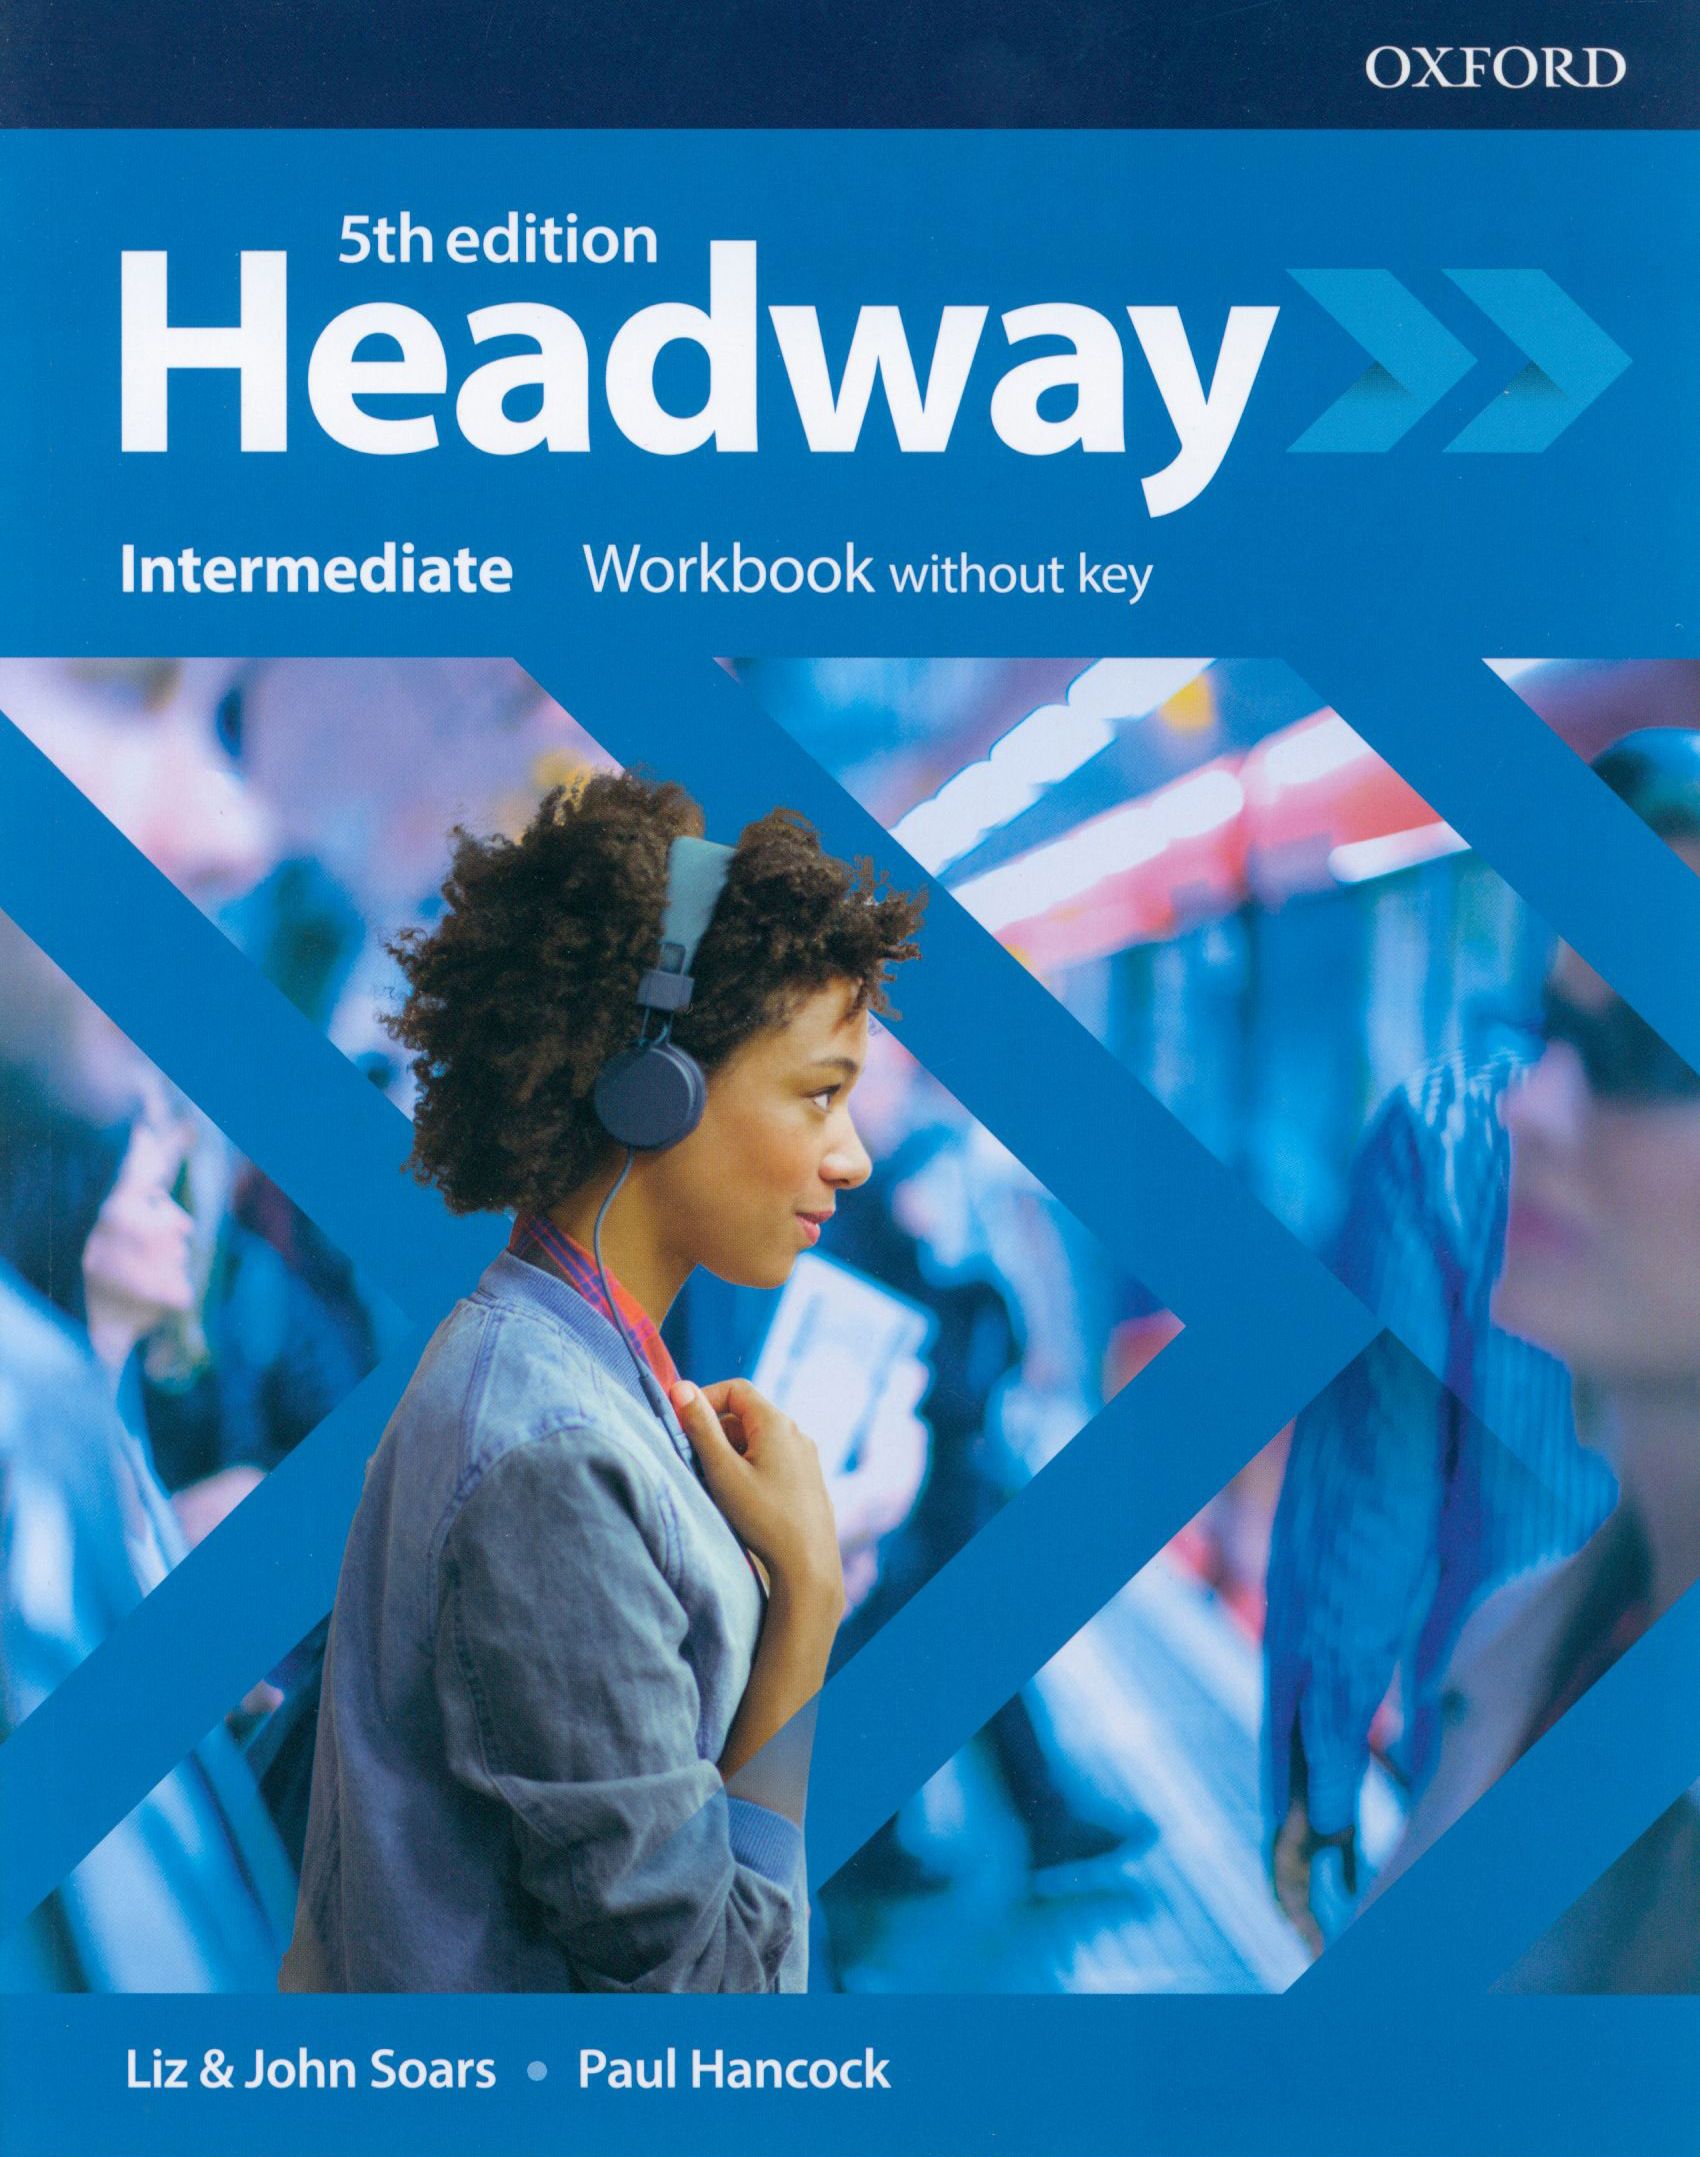 Oxford 5th Edition Headway. Headway, 5th Edition - 2019. Headway pre-Intermediate 5th Edition. Headway books 5th Edition.